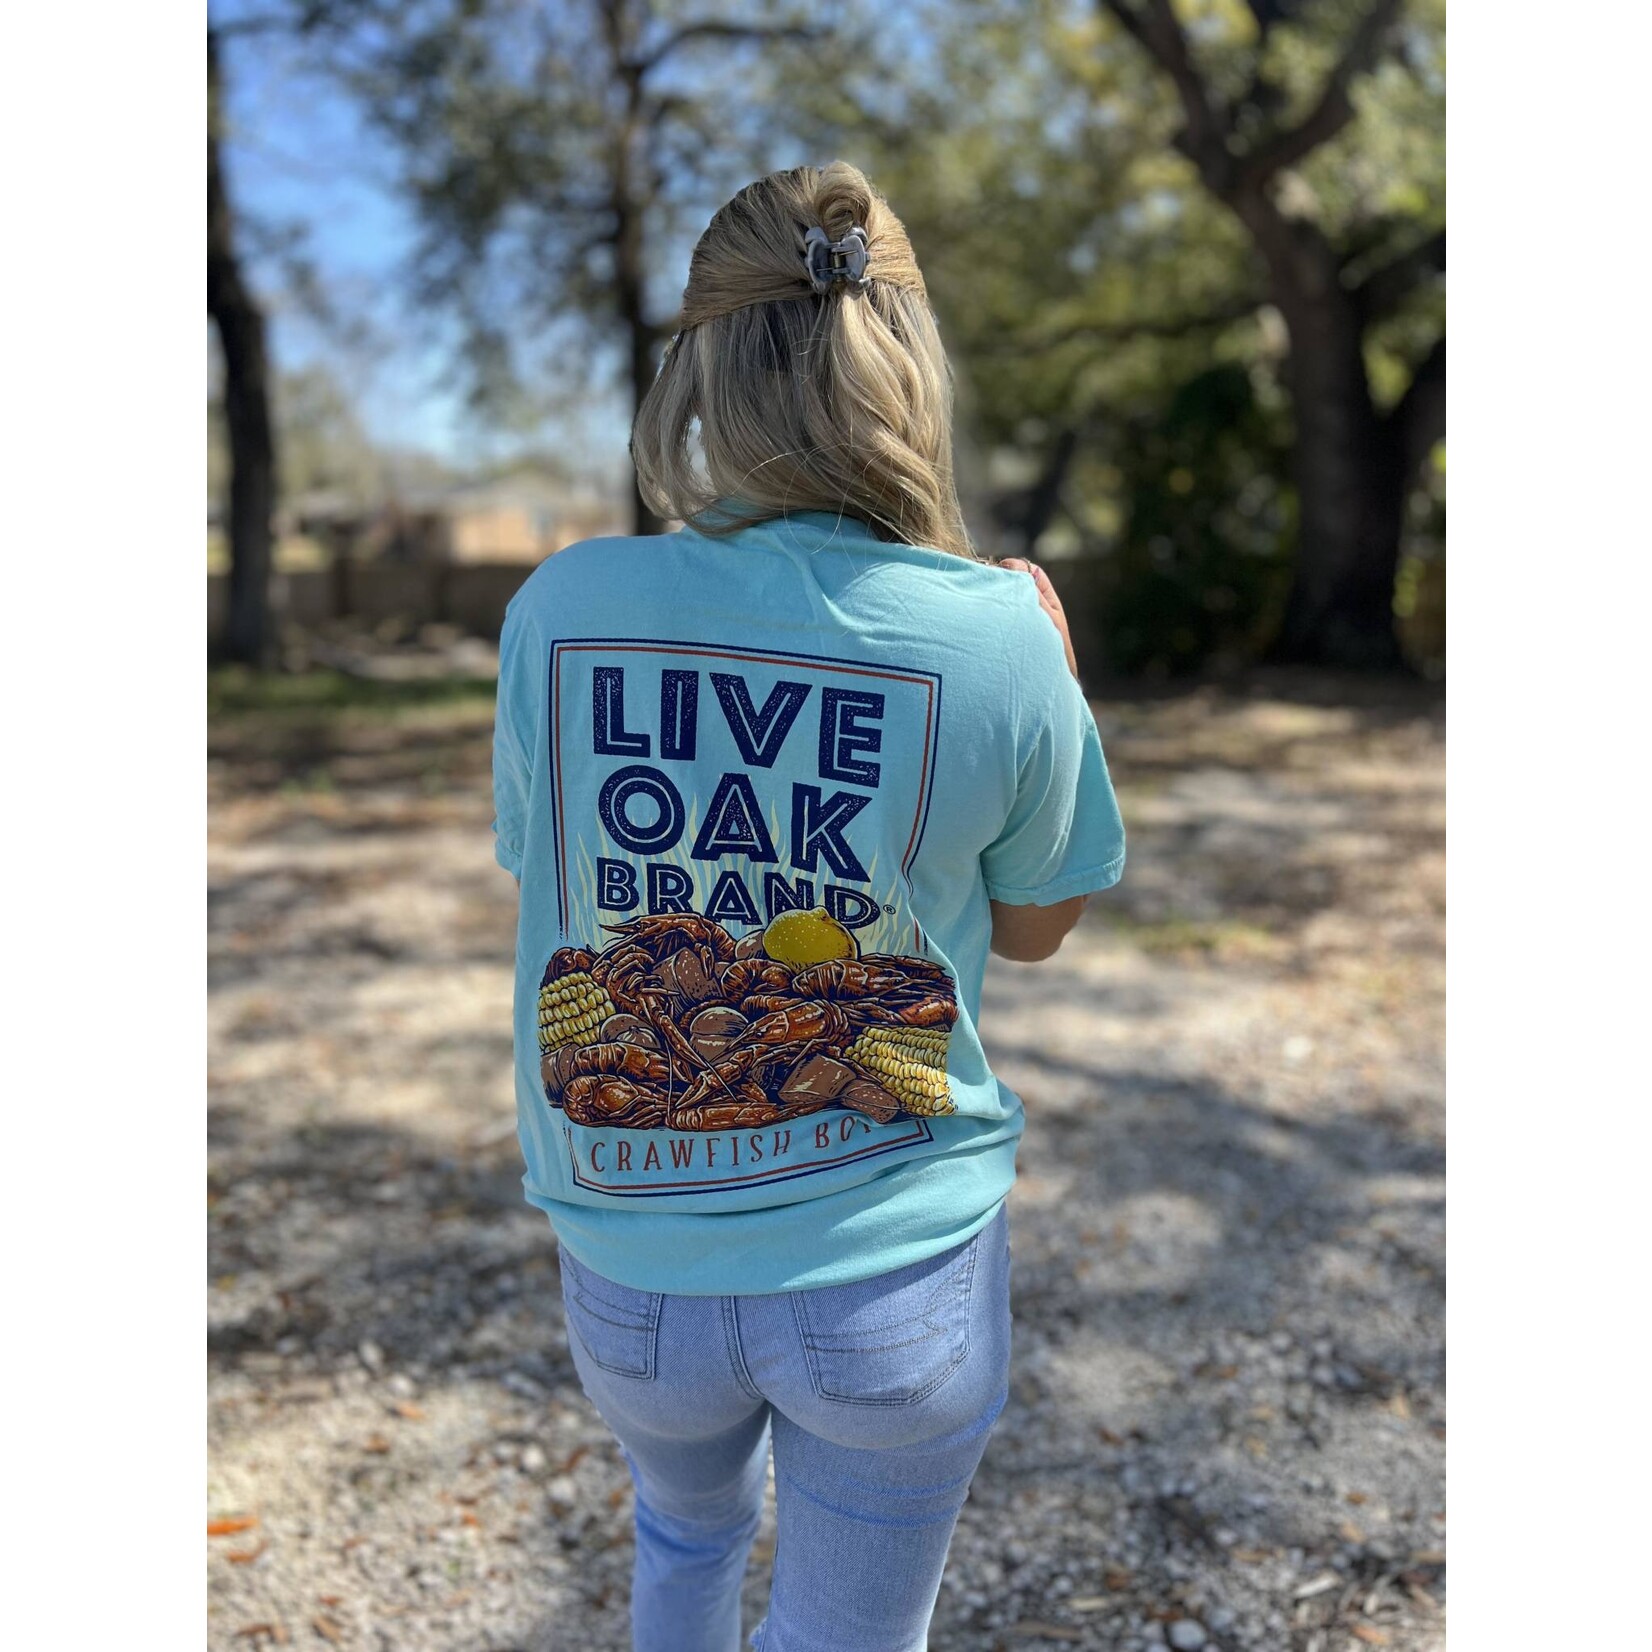 Live Oak Brand Live Oak Brand Crawfish Boil S/S TEE Shirt